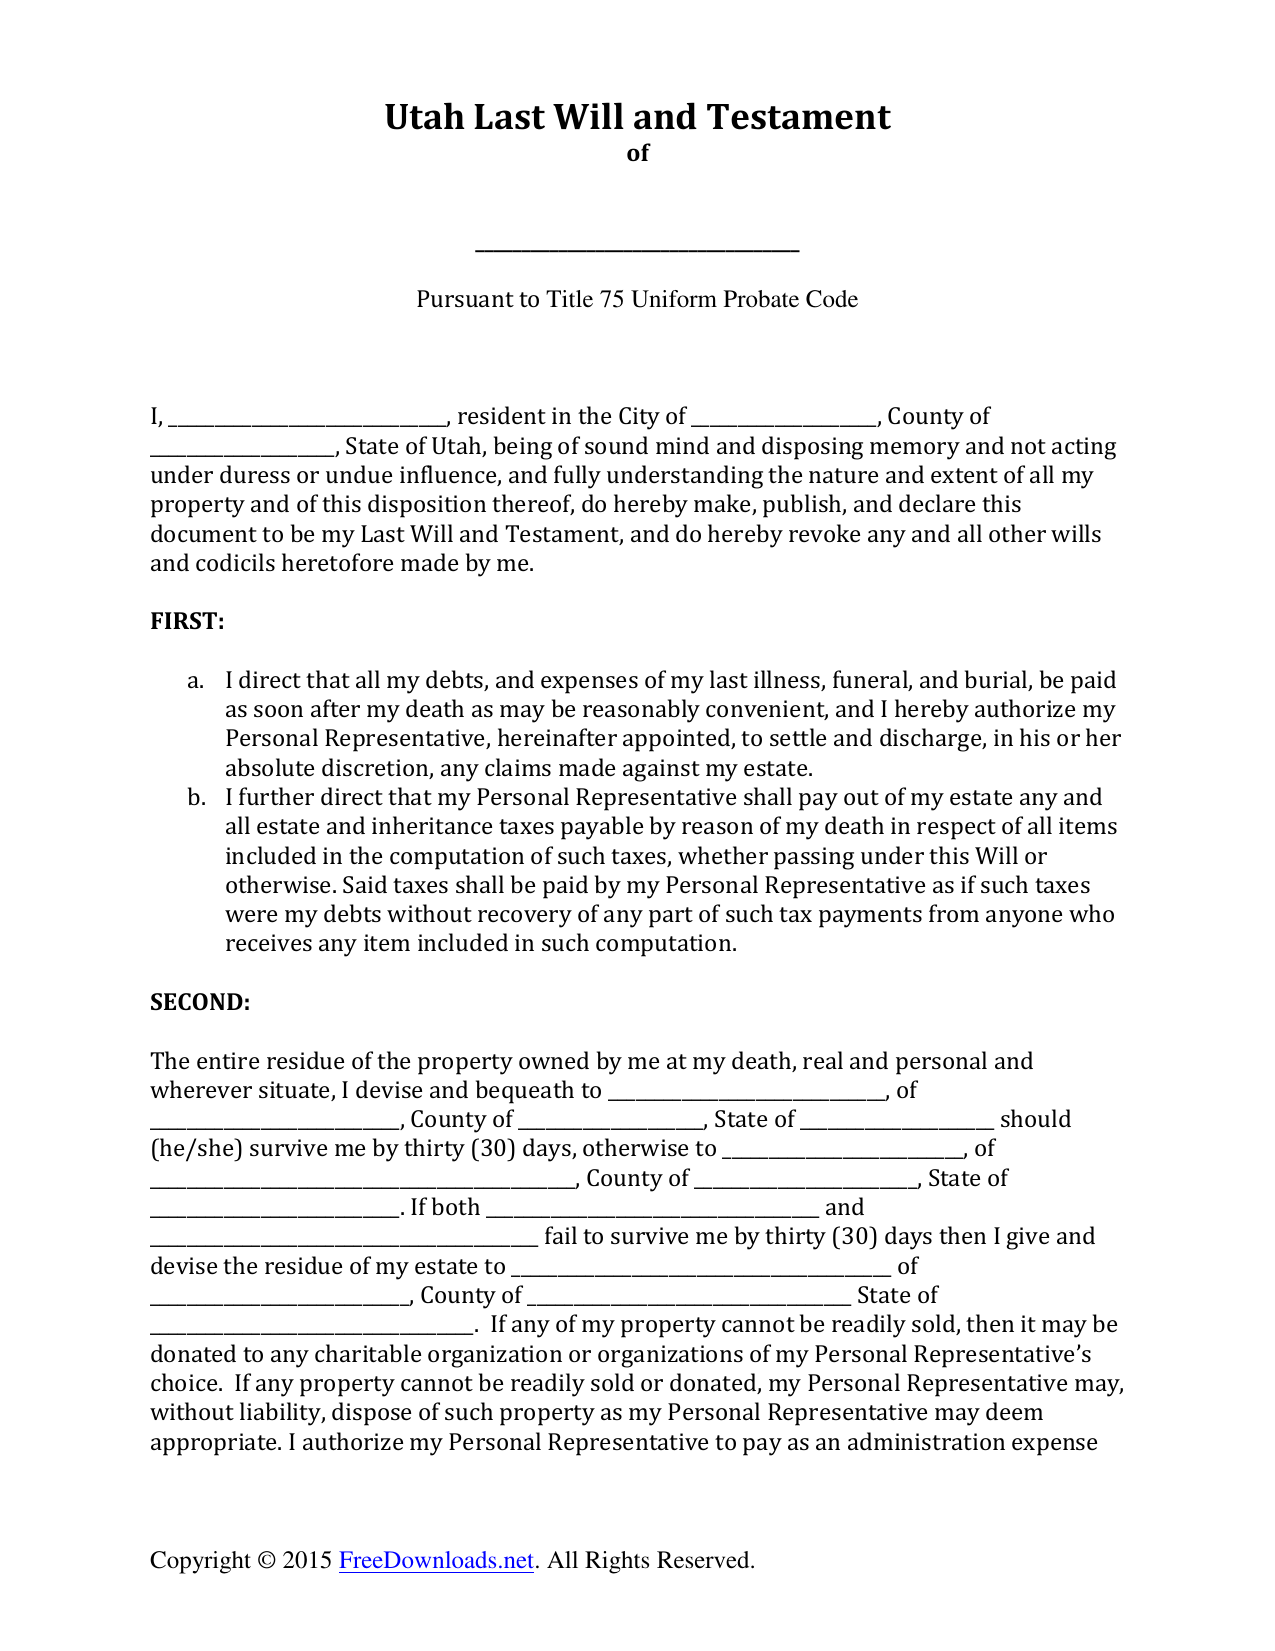 Download Utah Last Will and Testament Form PDF RTF Word